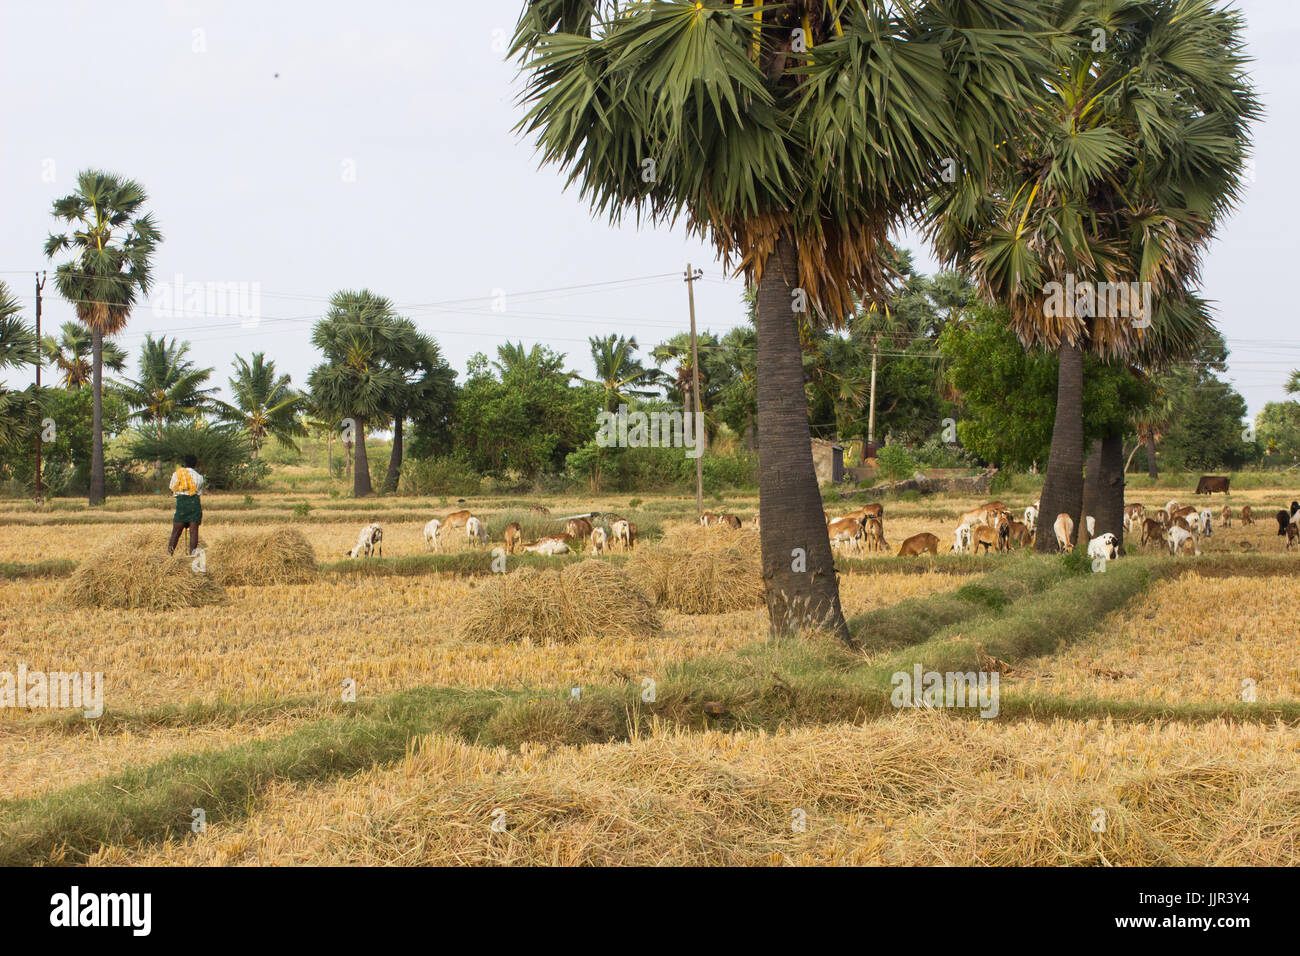 Rice paddy field in Tamilnadu, India. Stock Photo